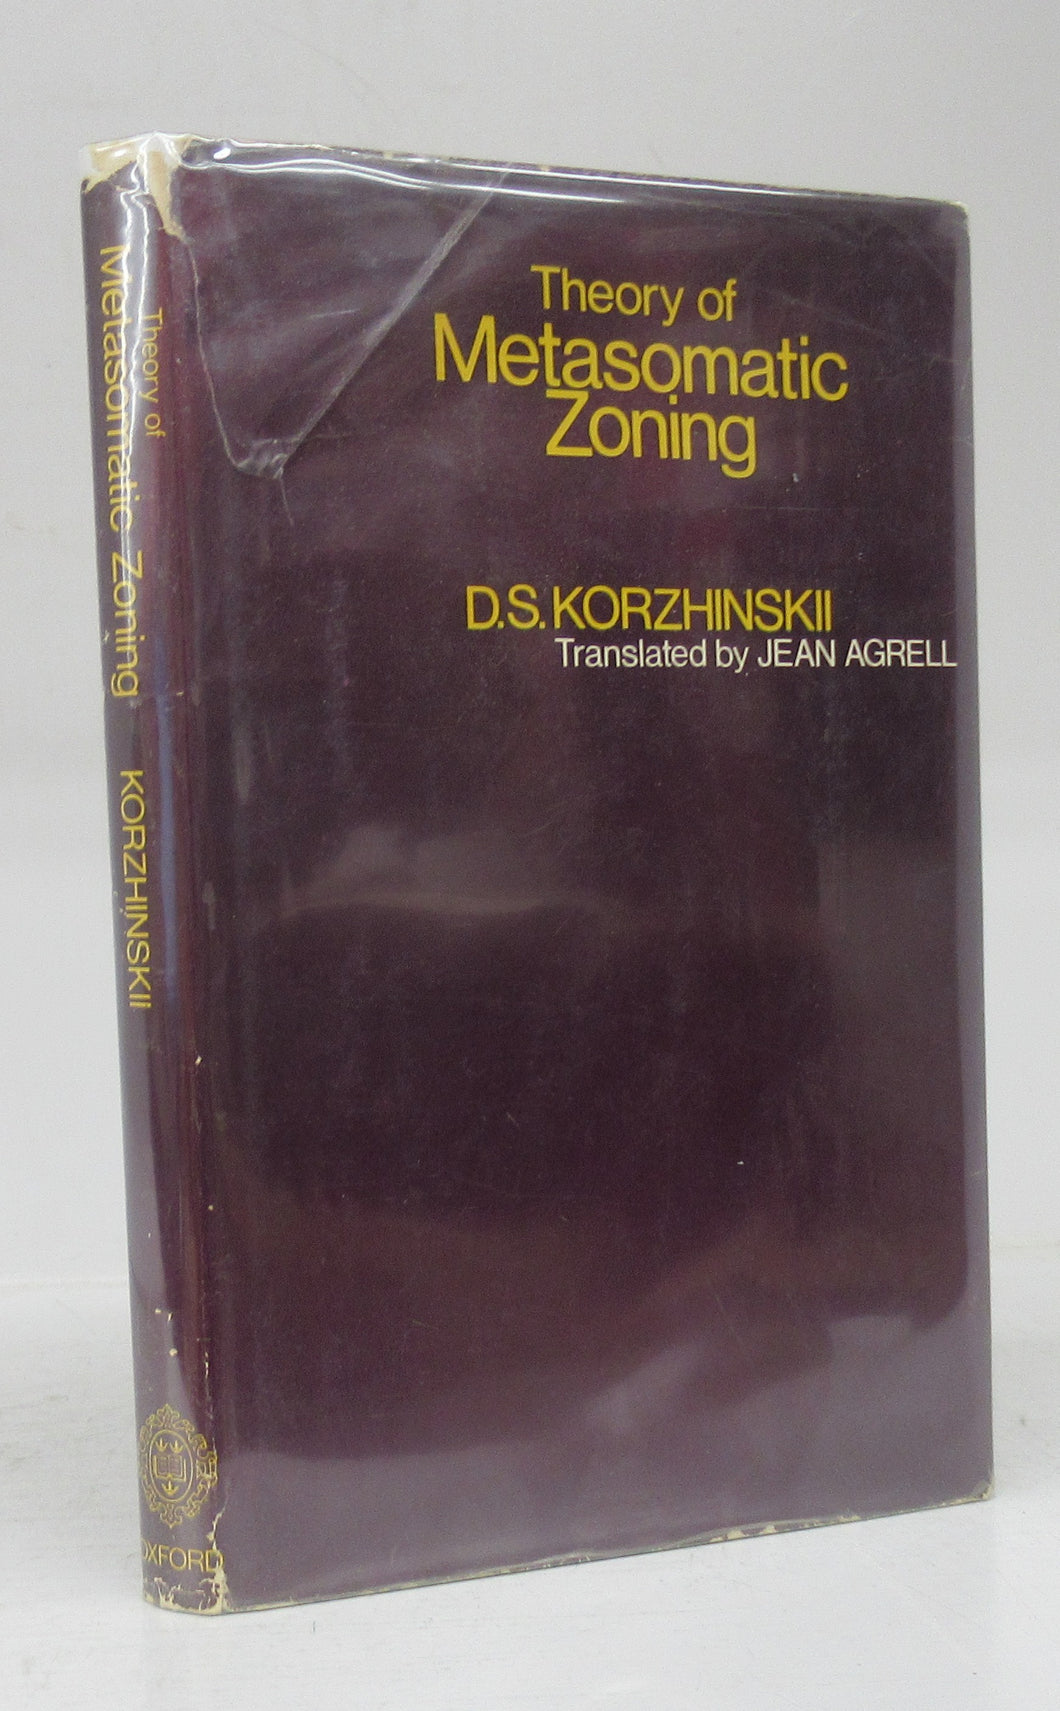 Theory of Metasomatic Zoning